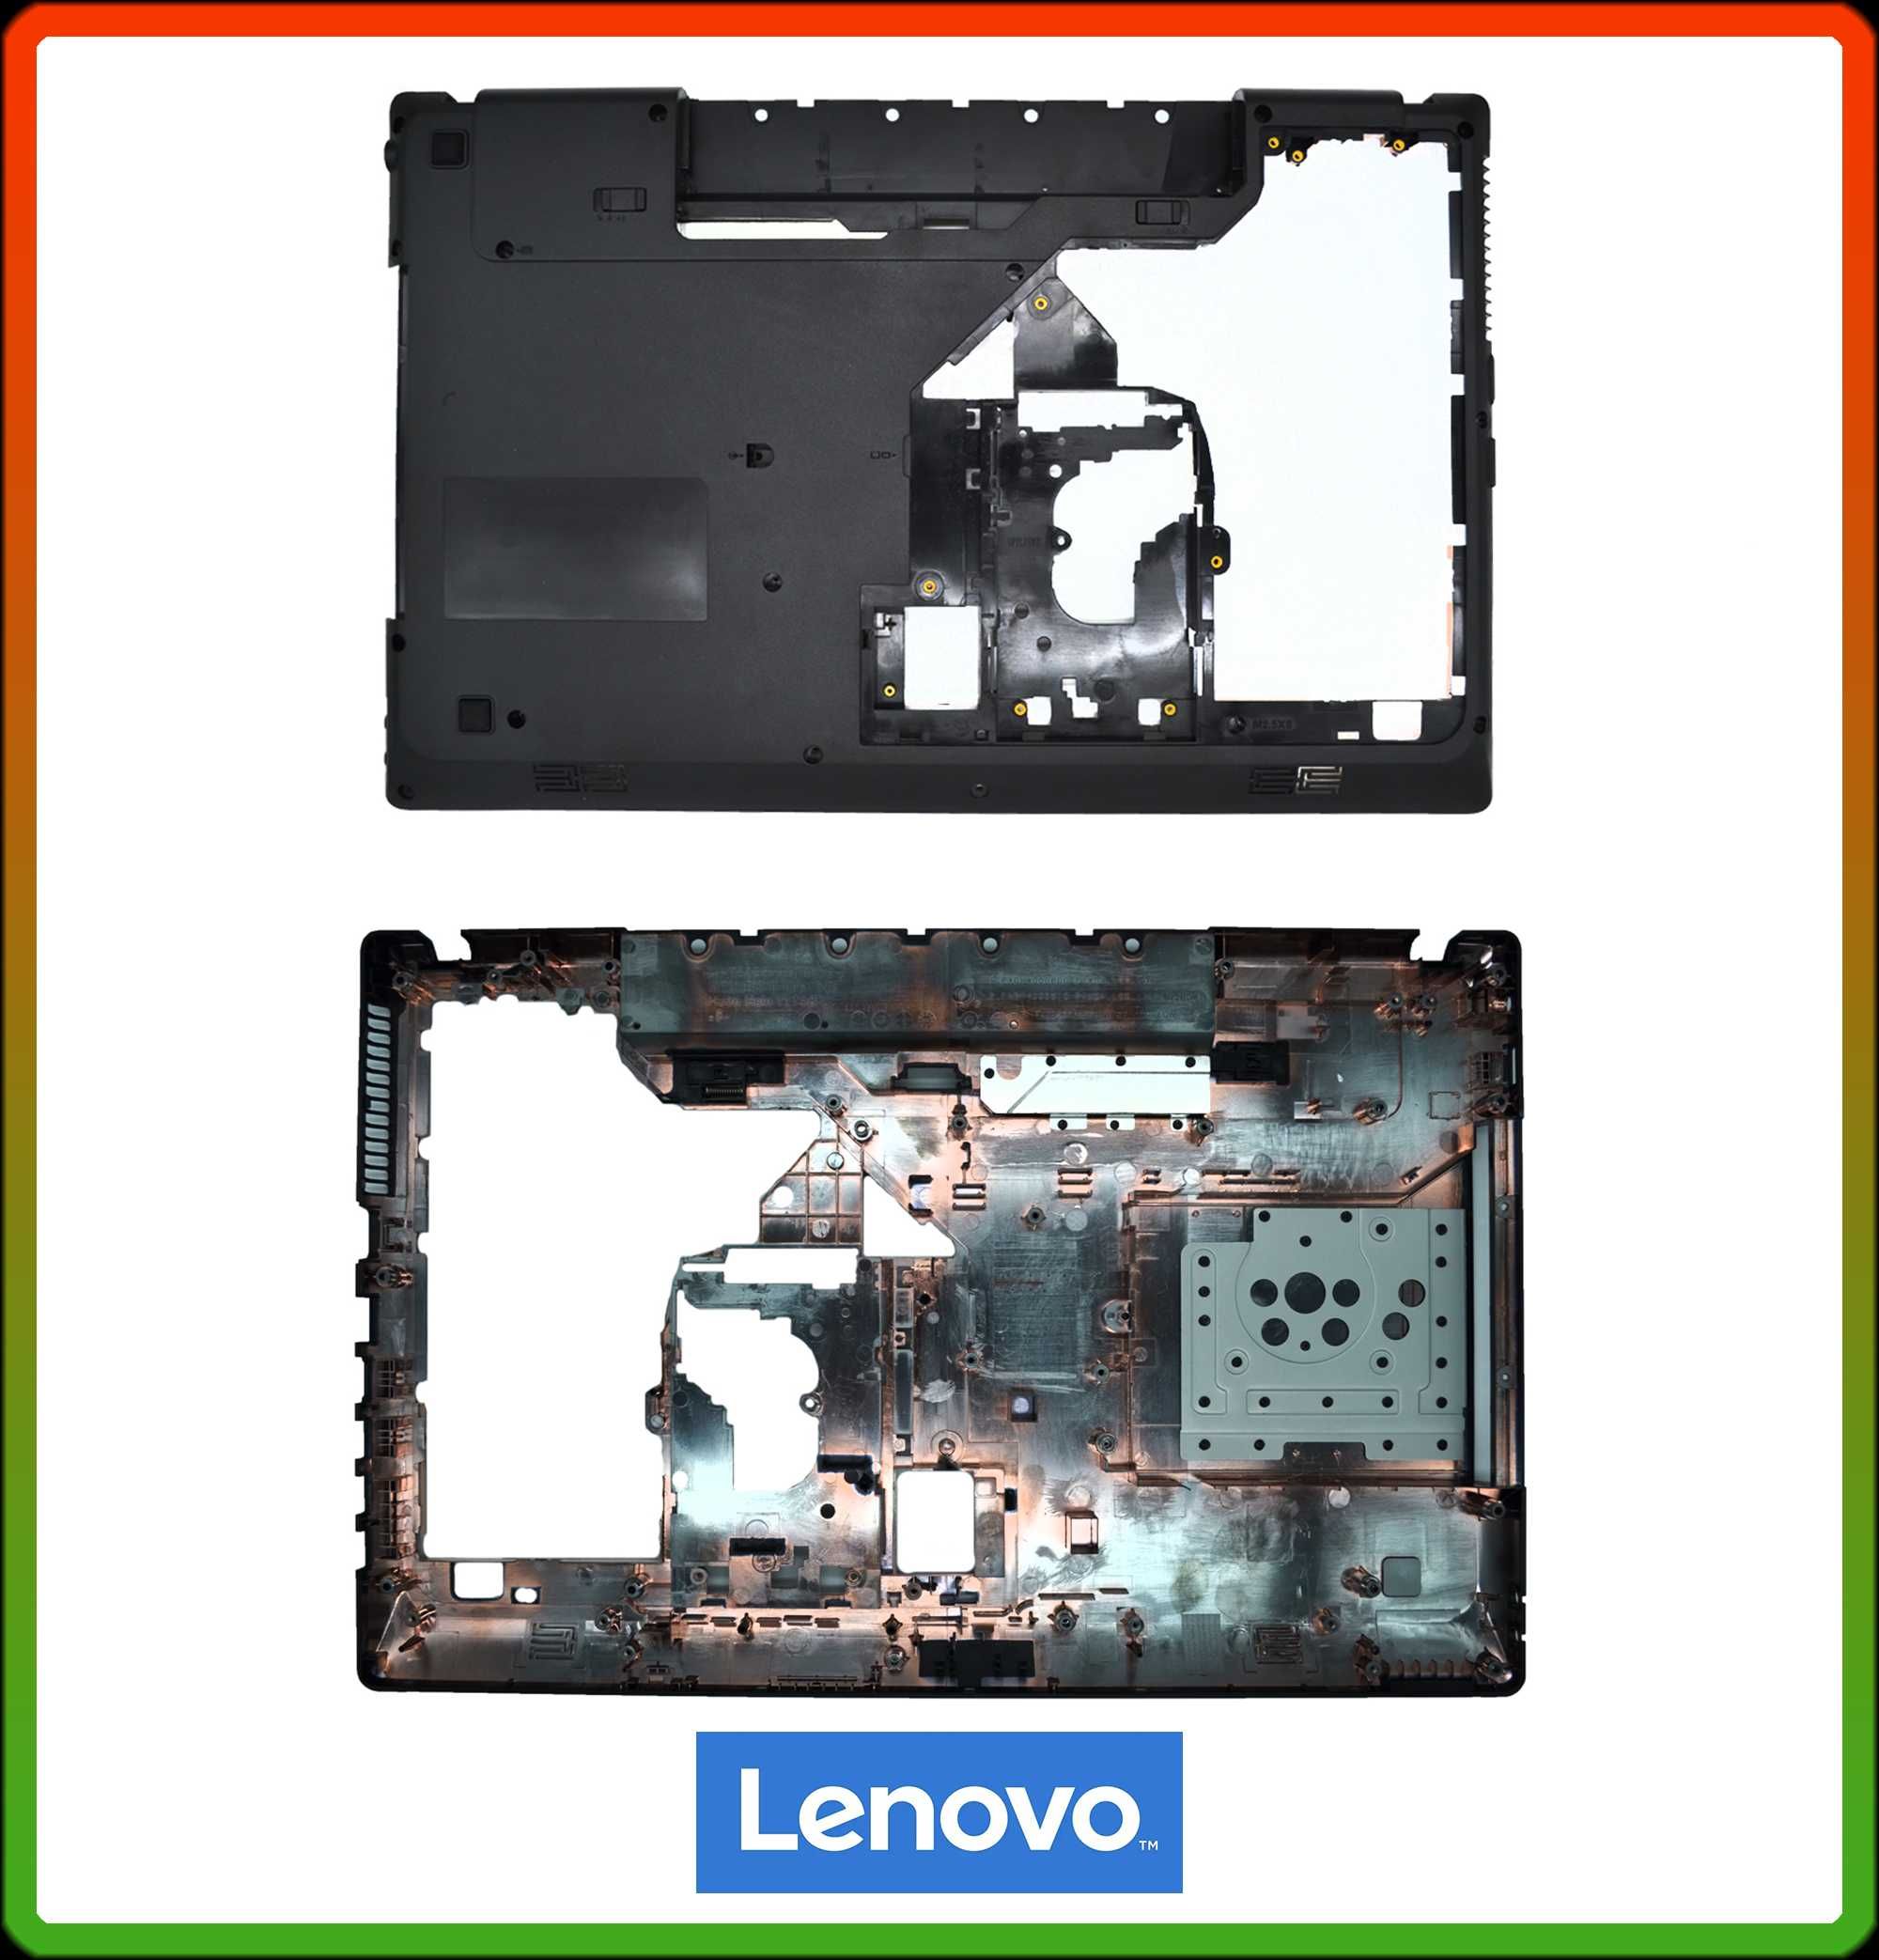 Нижняя крышка корпуса Lenovo G770 (поддон, корыто)